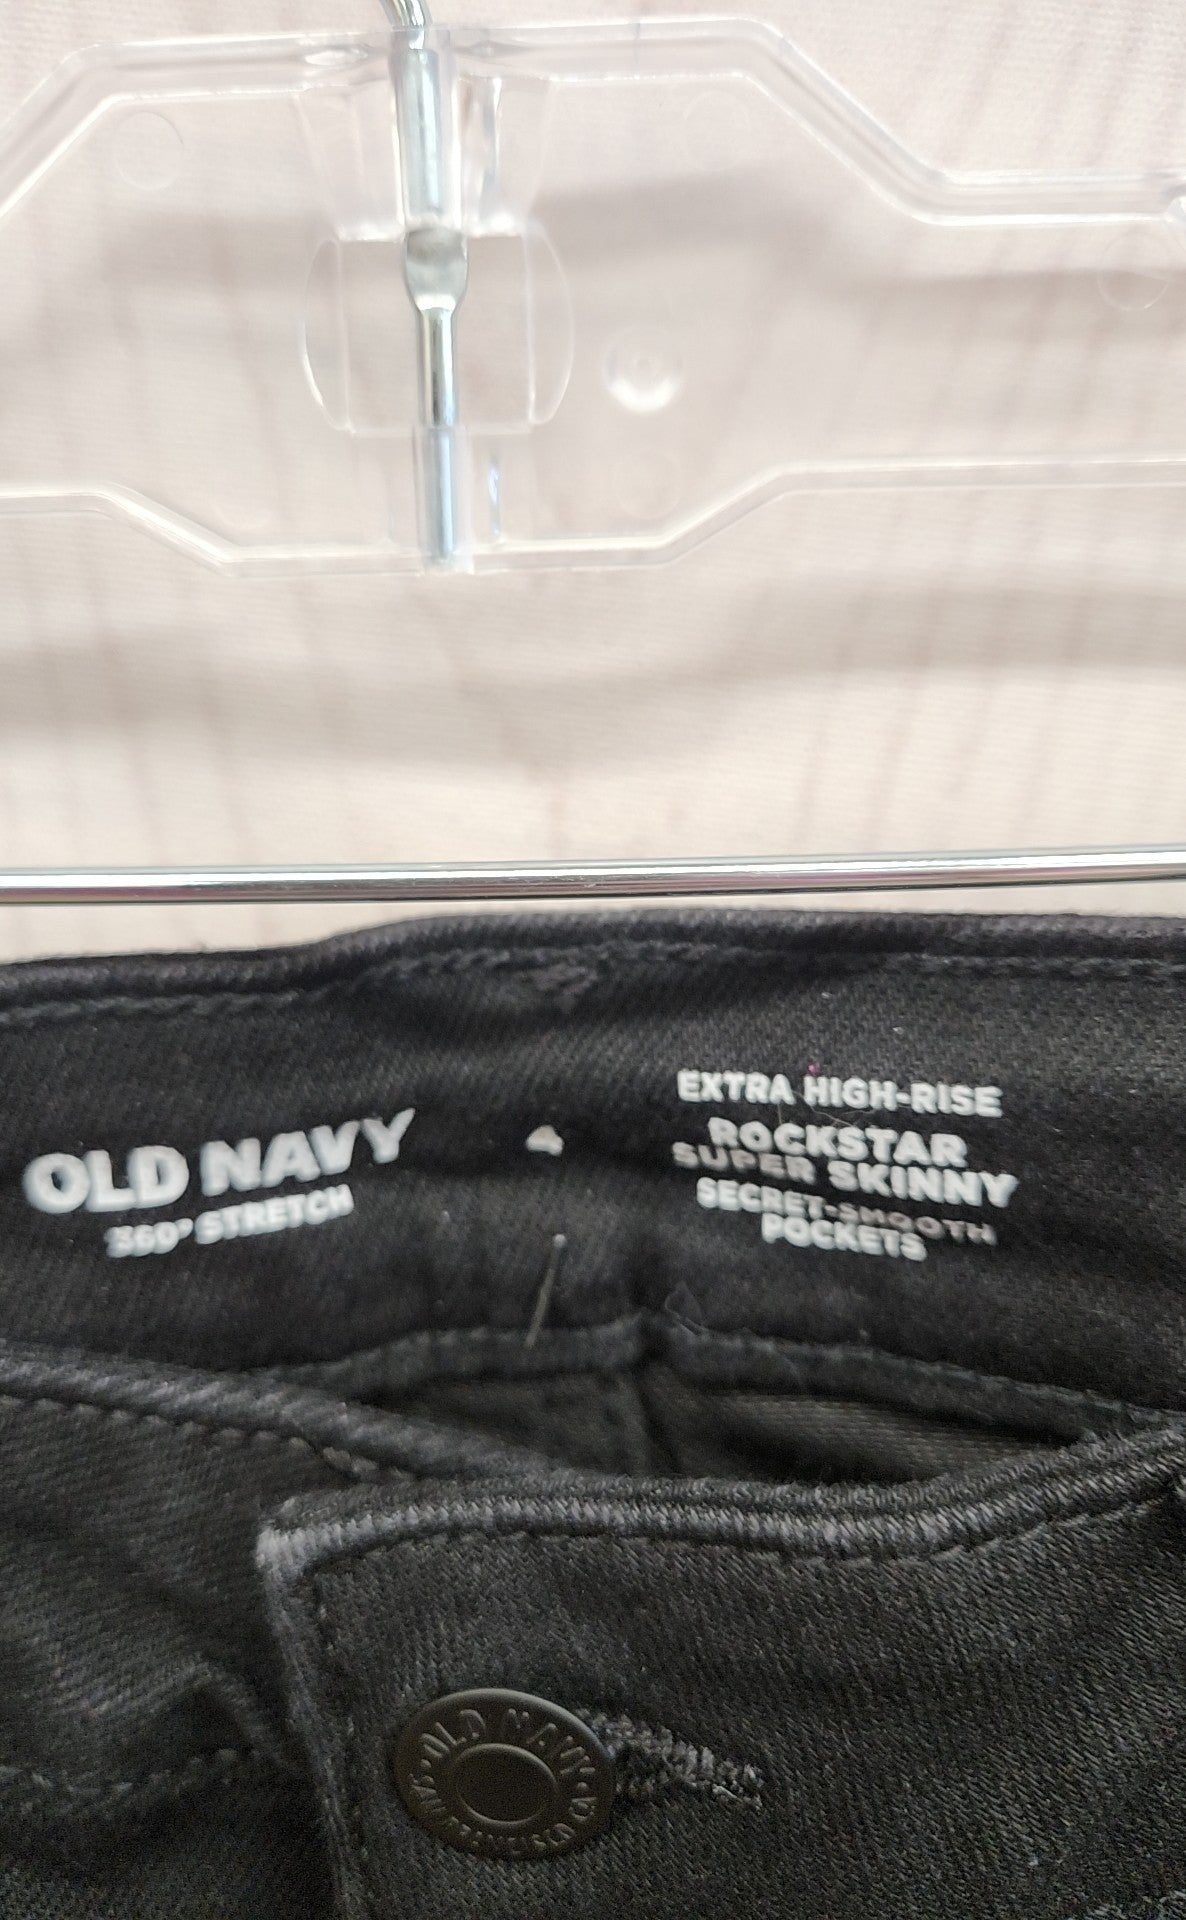 Old Navy Women's Size 27 (3-4) Black Jeans